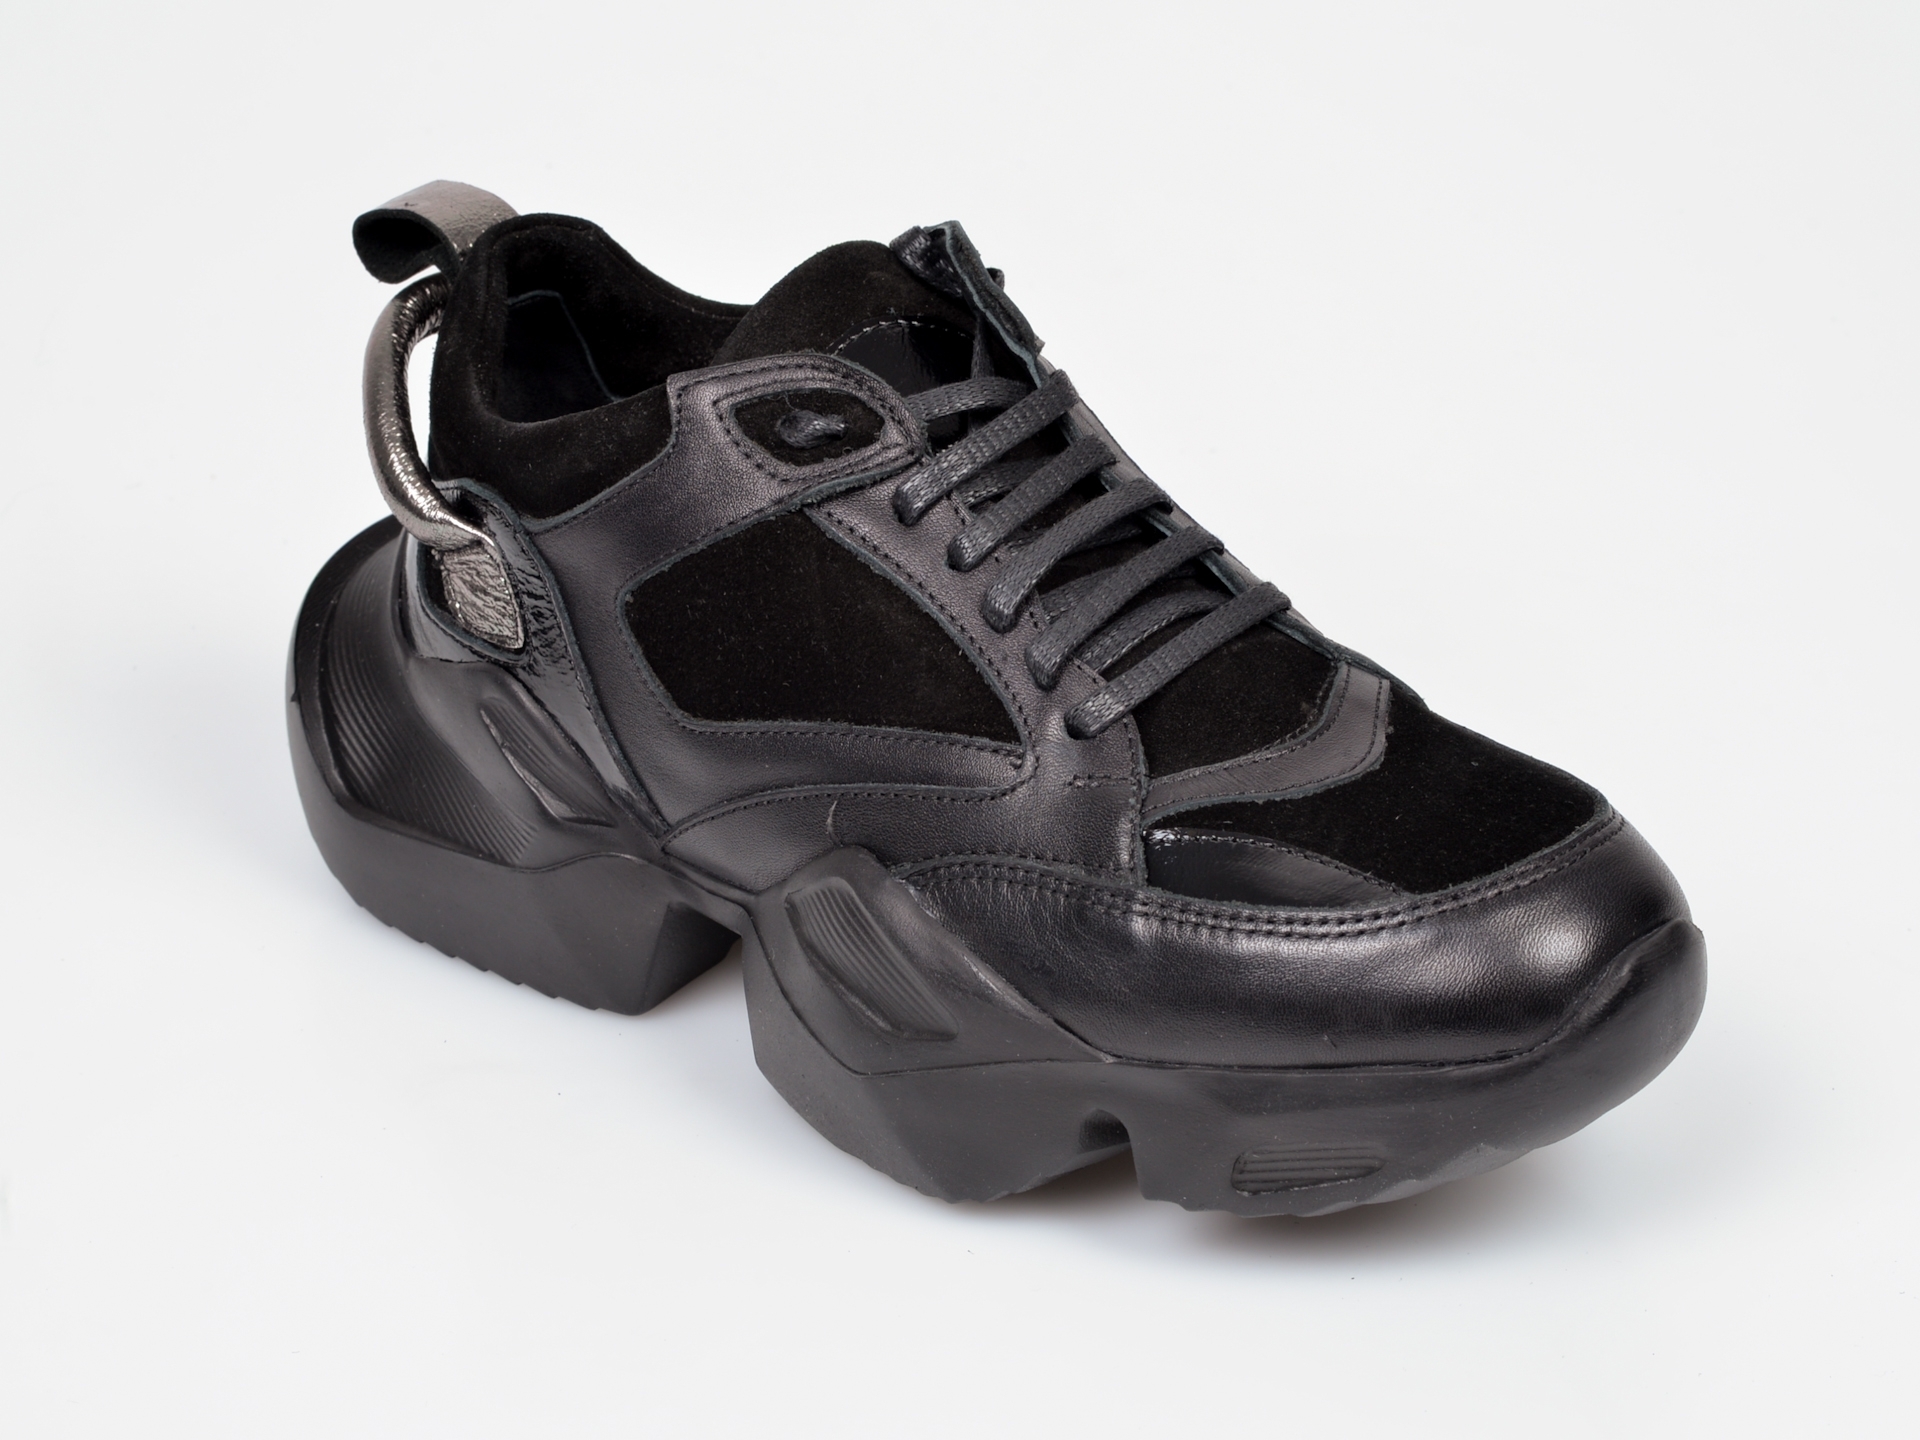 Pantofi sport FLAVIA PASSINI negri, 2434, din piele naturala